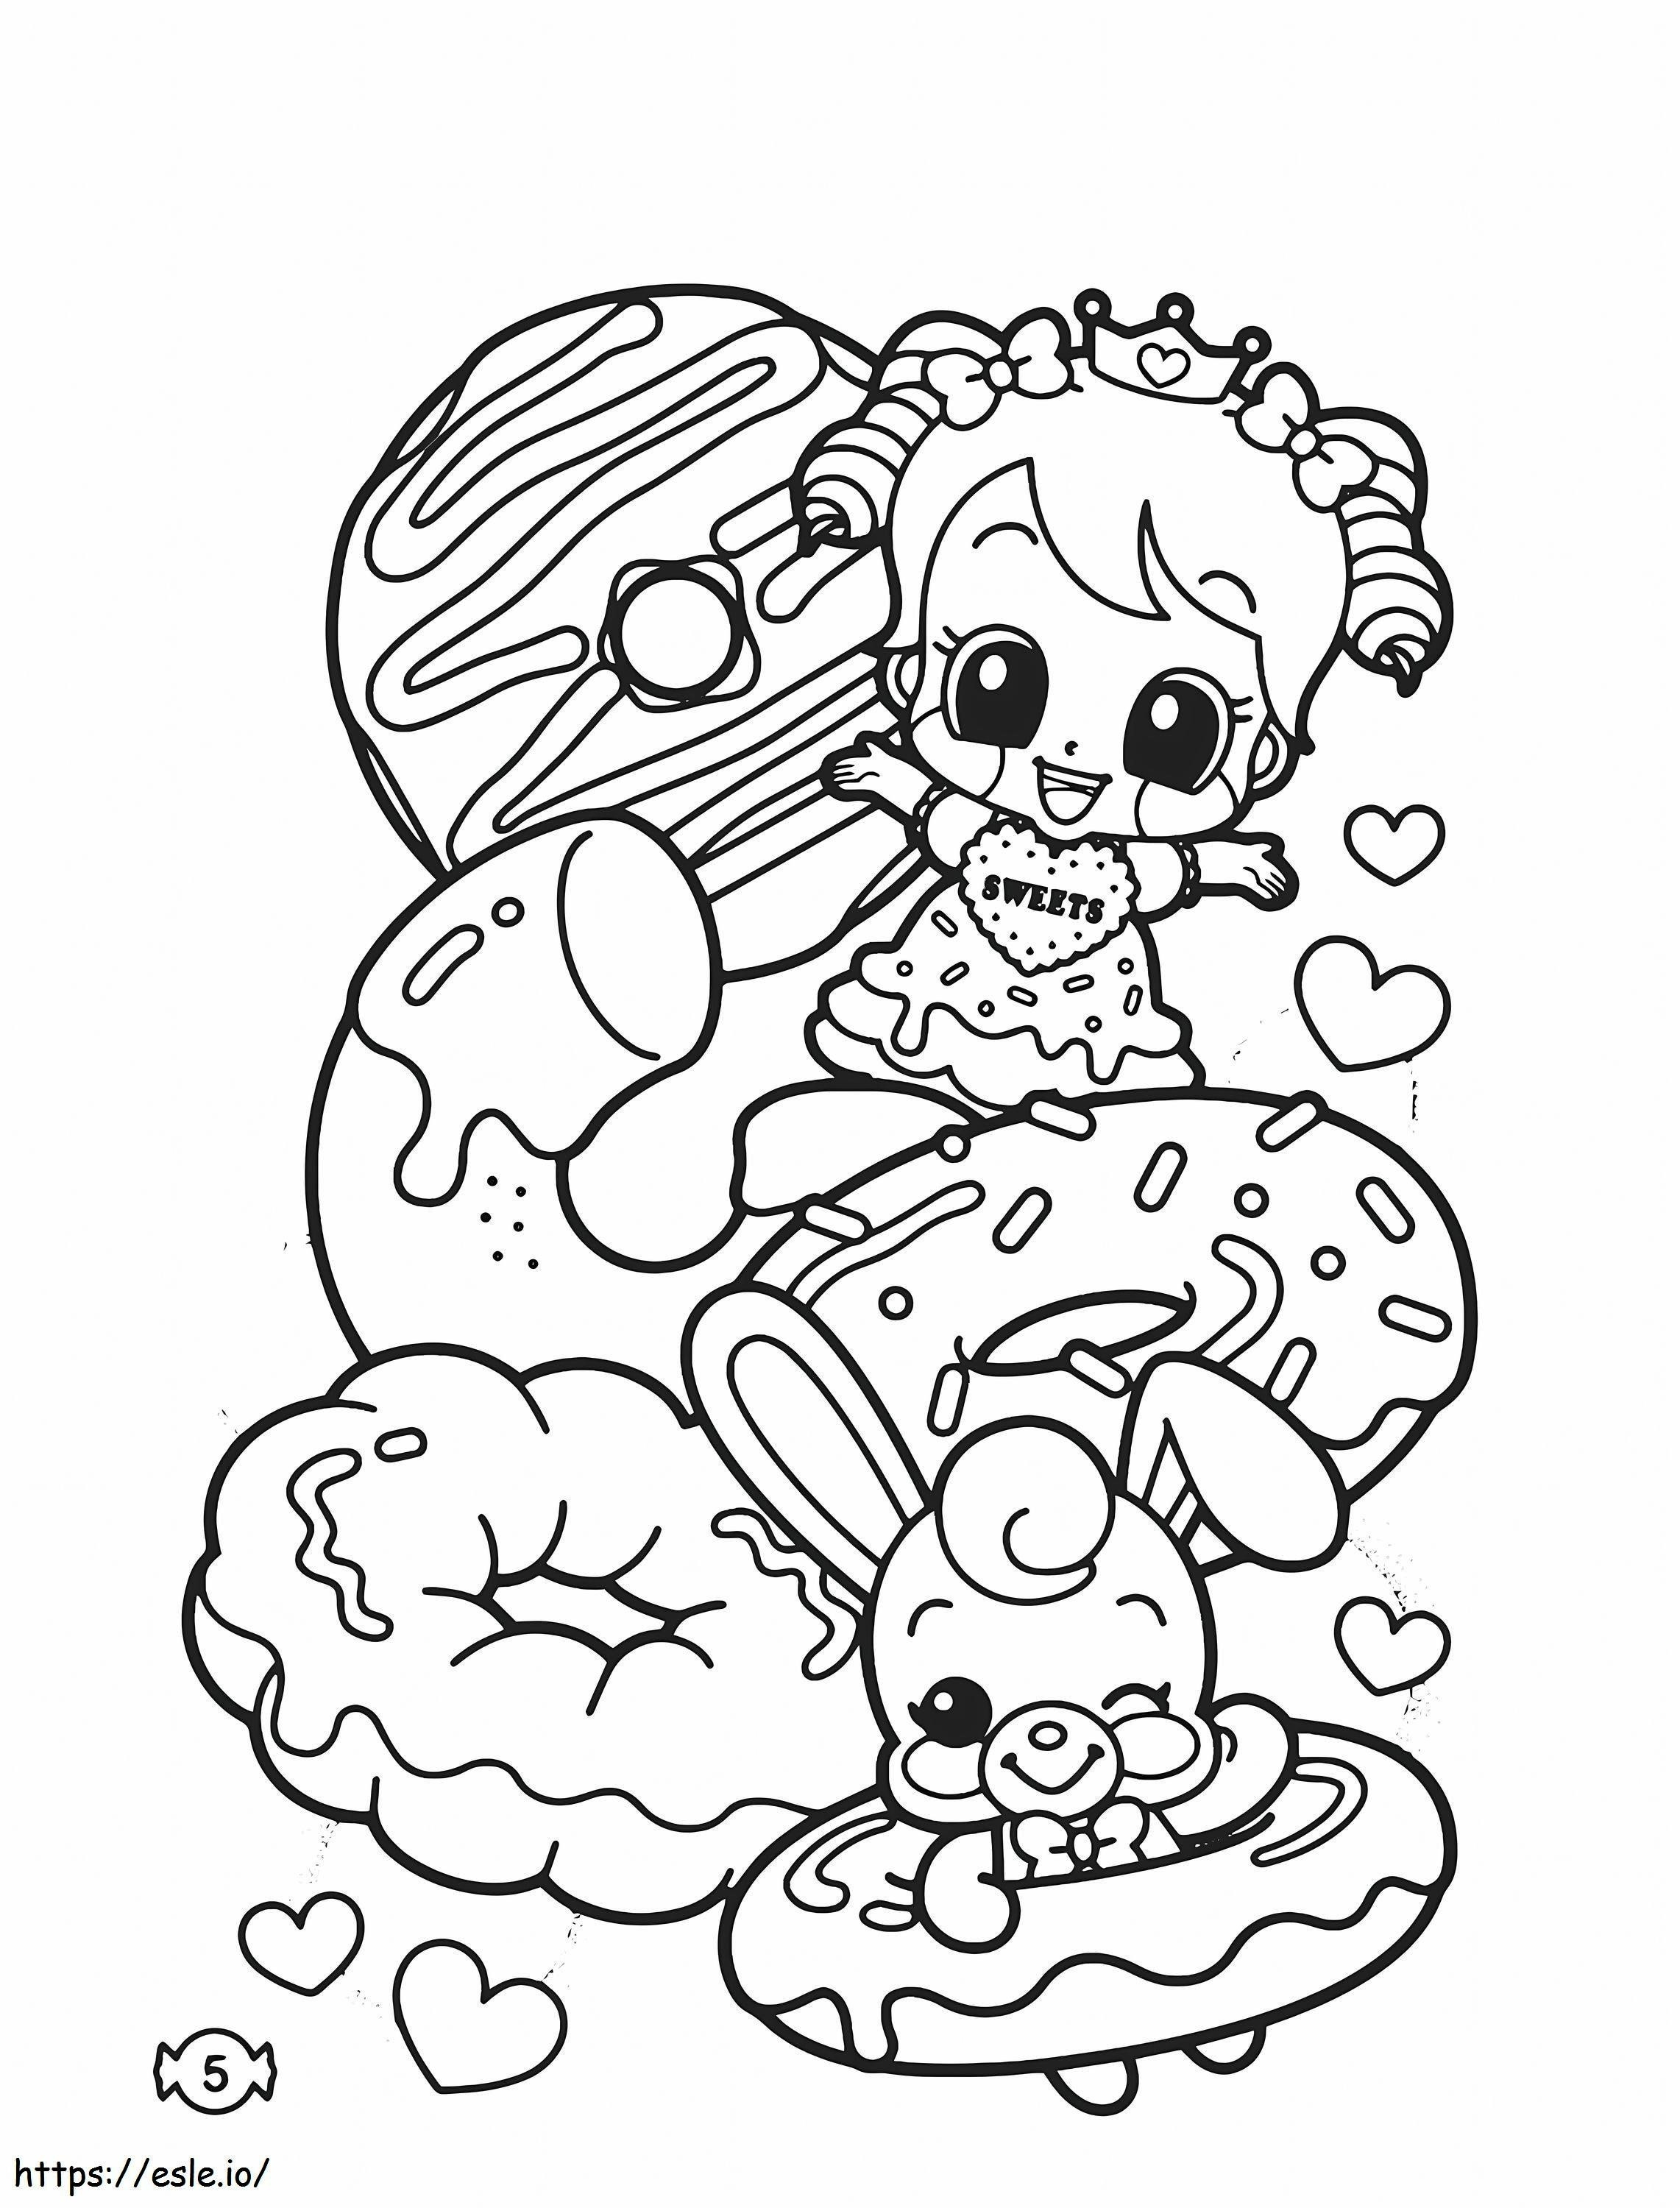 Kawaii Food I Love Donut coloring page